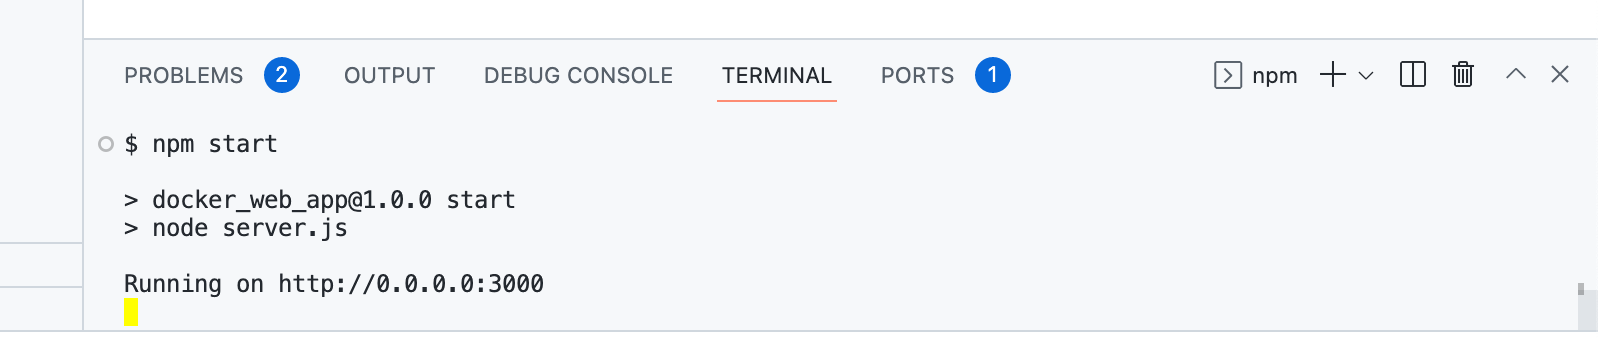 Screenshot of running "npm start" in the Terminal. The final output reads "Running on http://0.0.0.0:3000."